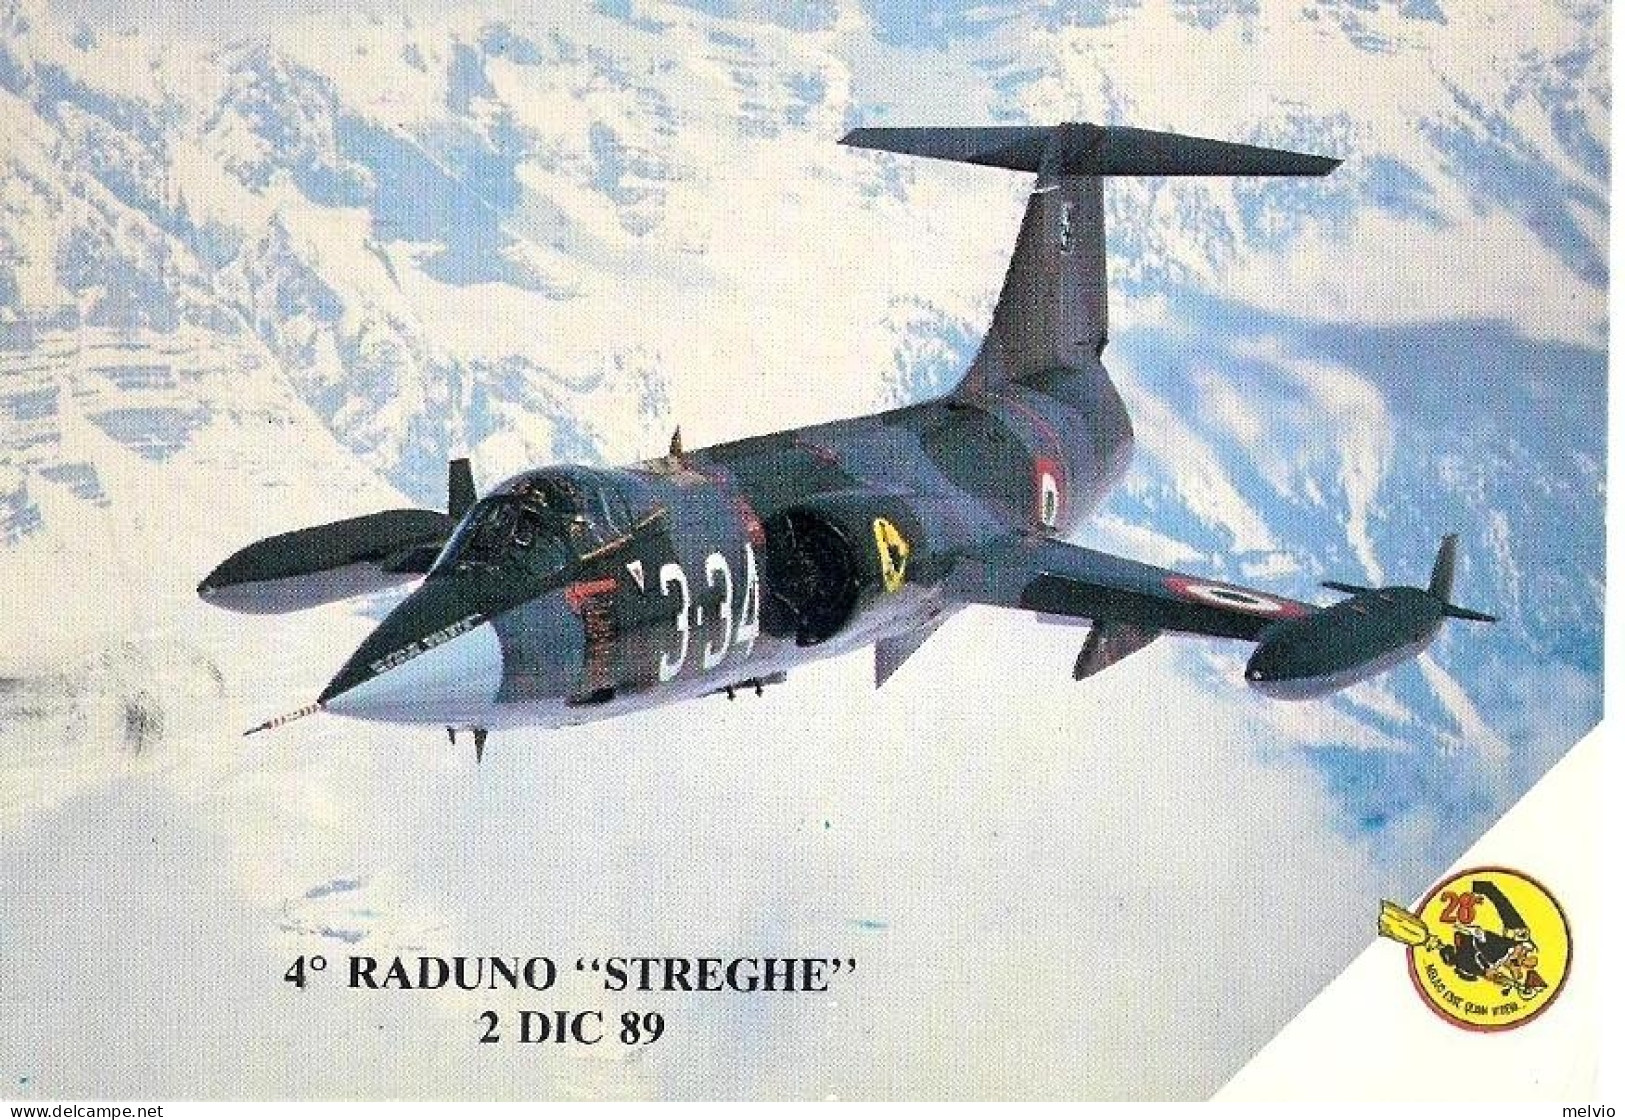 San Marino-1989 Cartolina Dell'aeronautica Militare Italiana Corriere Aeropostal - Corréo Aéreo